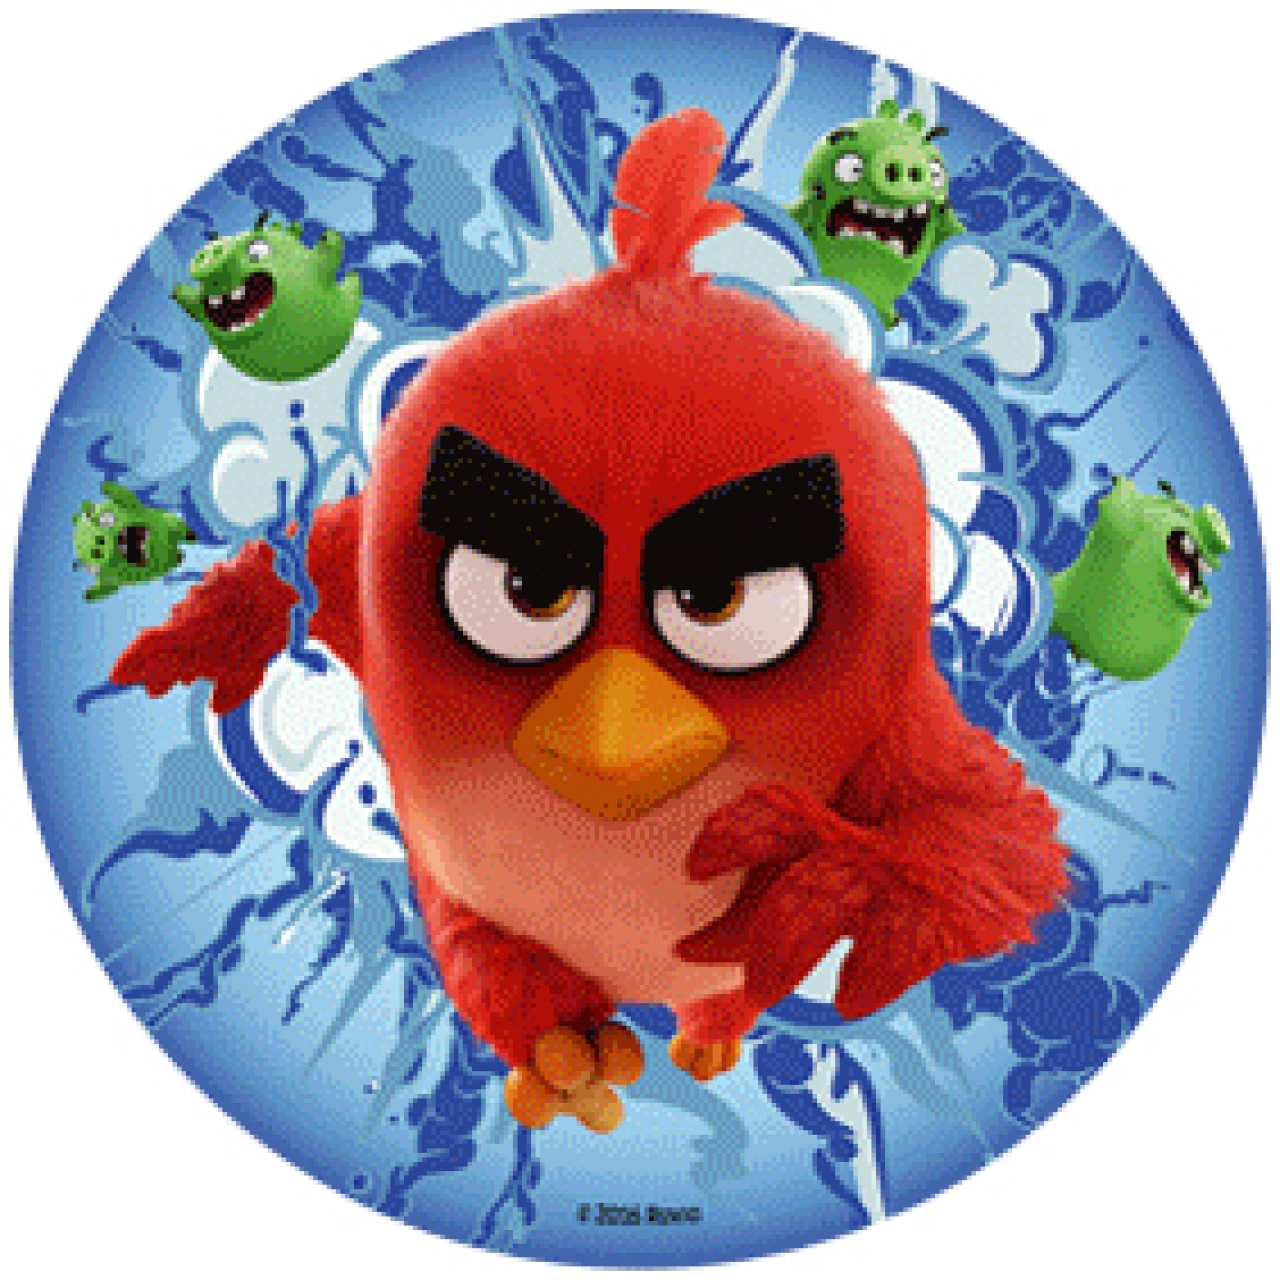 Tortenaufleger "Angry Birds" aus Oblatenpapier, Red, 21 cm